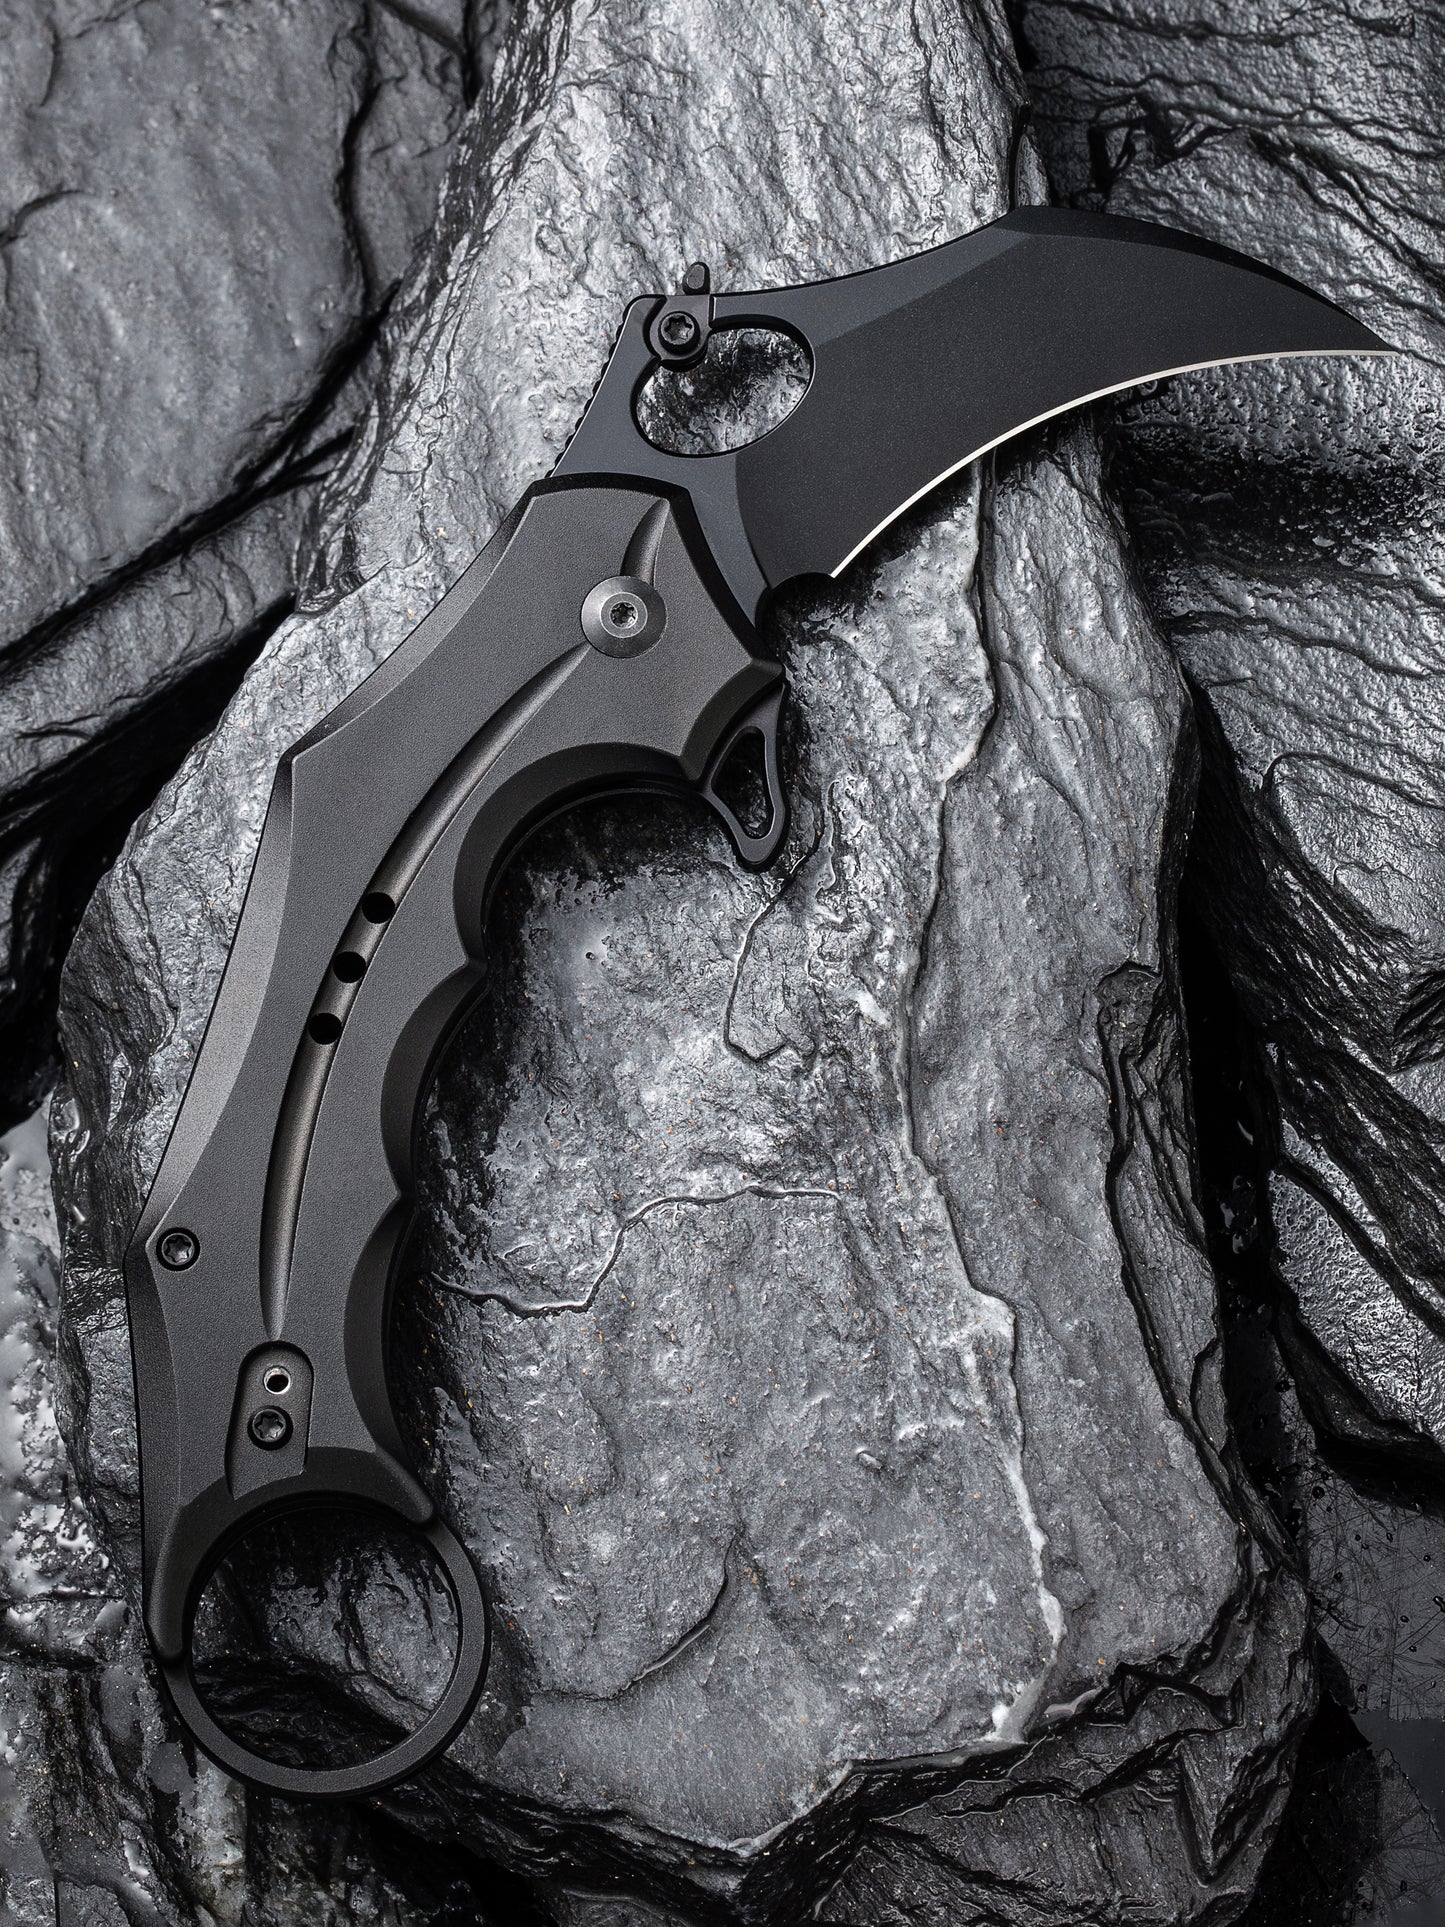 Civivi Incisor 2.02" Nitro-V Black Aluminium Karambit Folding Knife C16016B-1